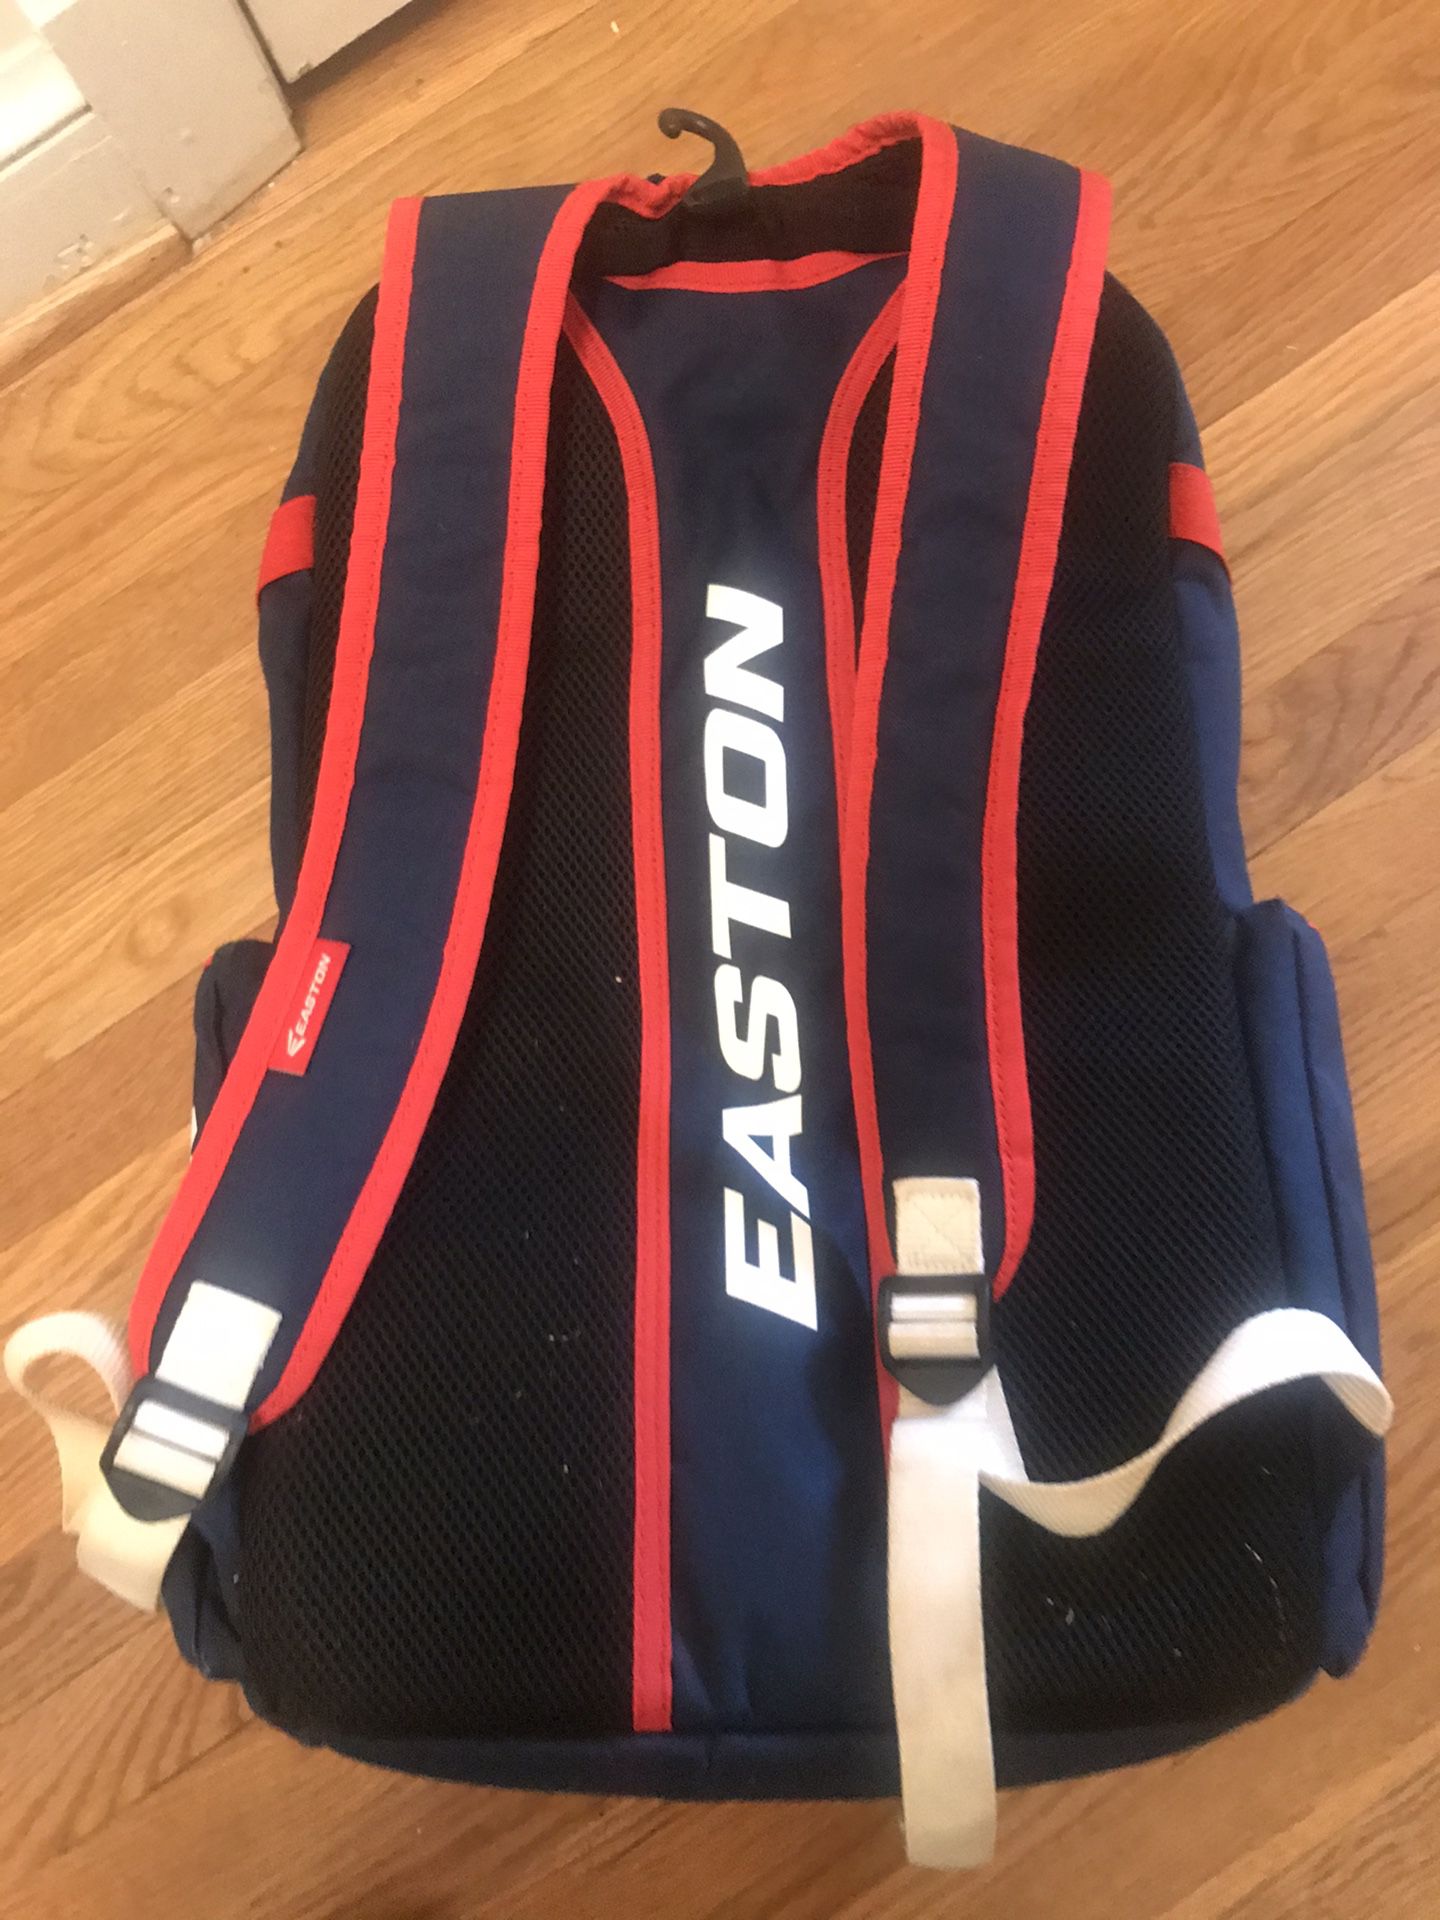 Easton Elite Baseball or Softball Bag